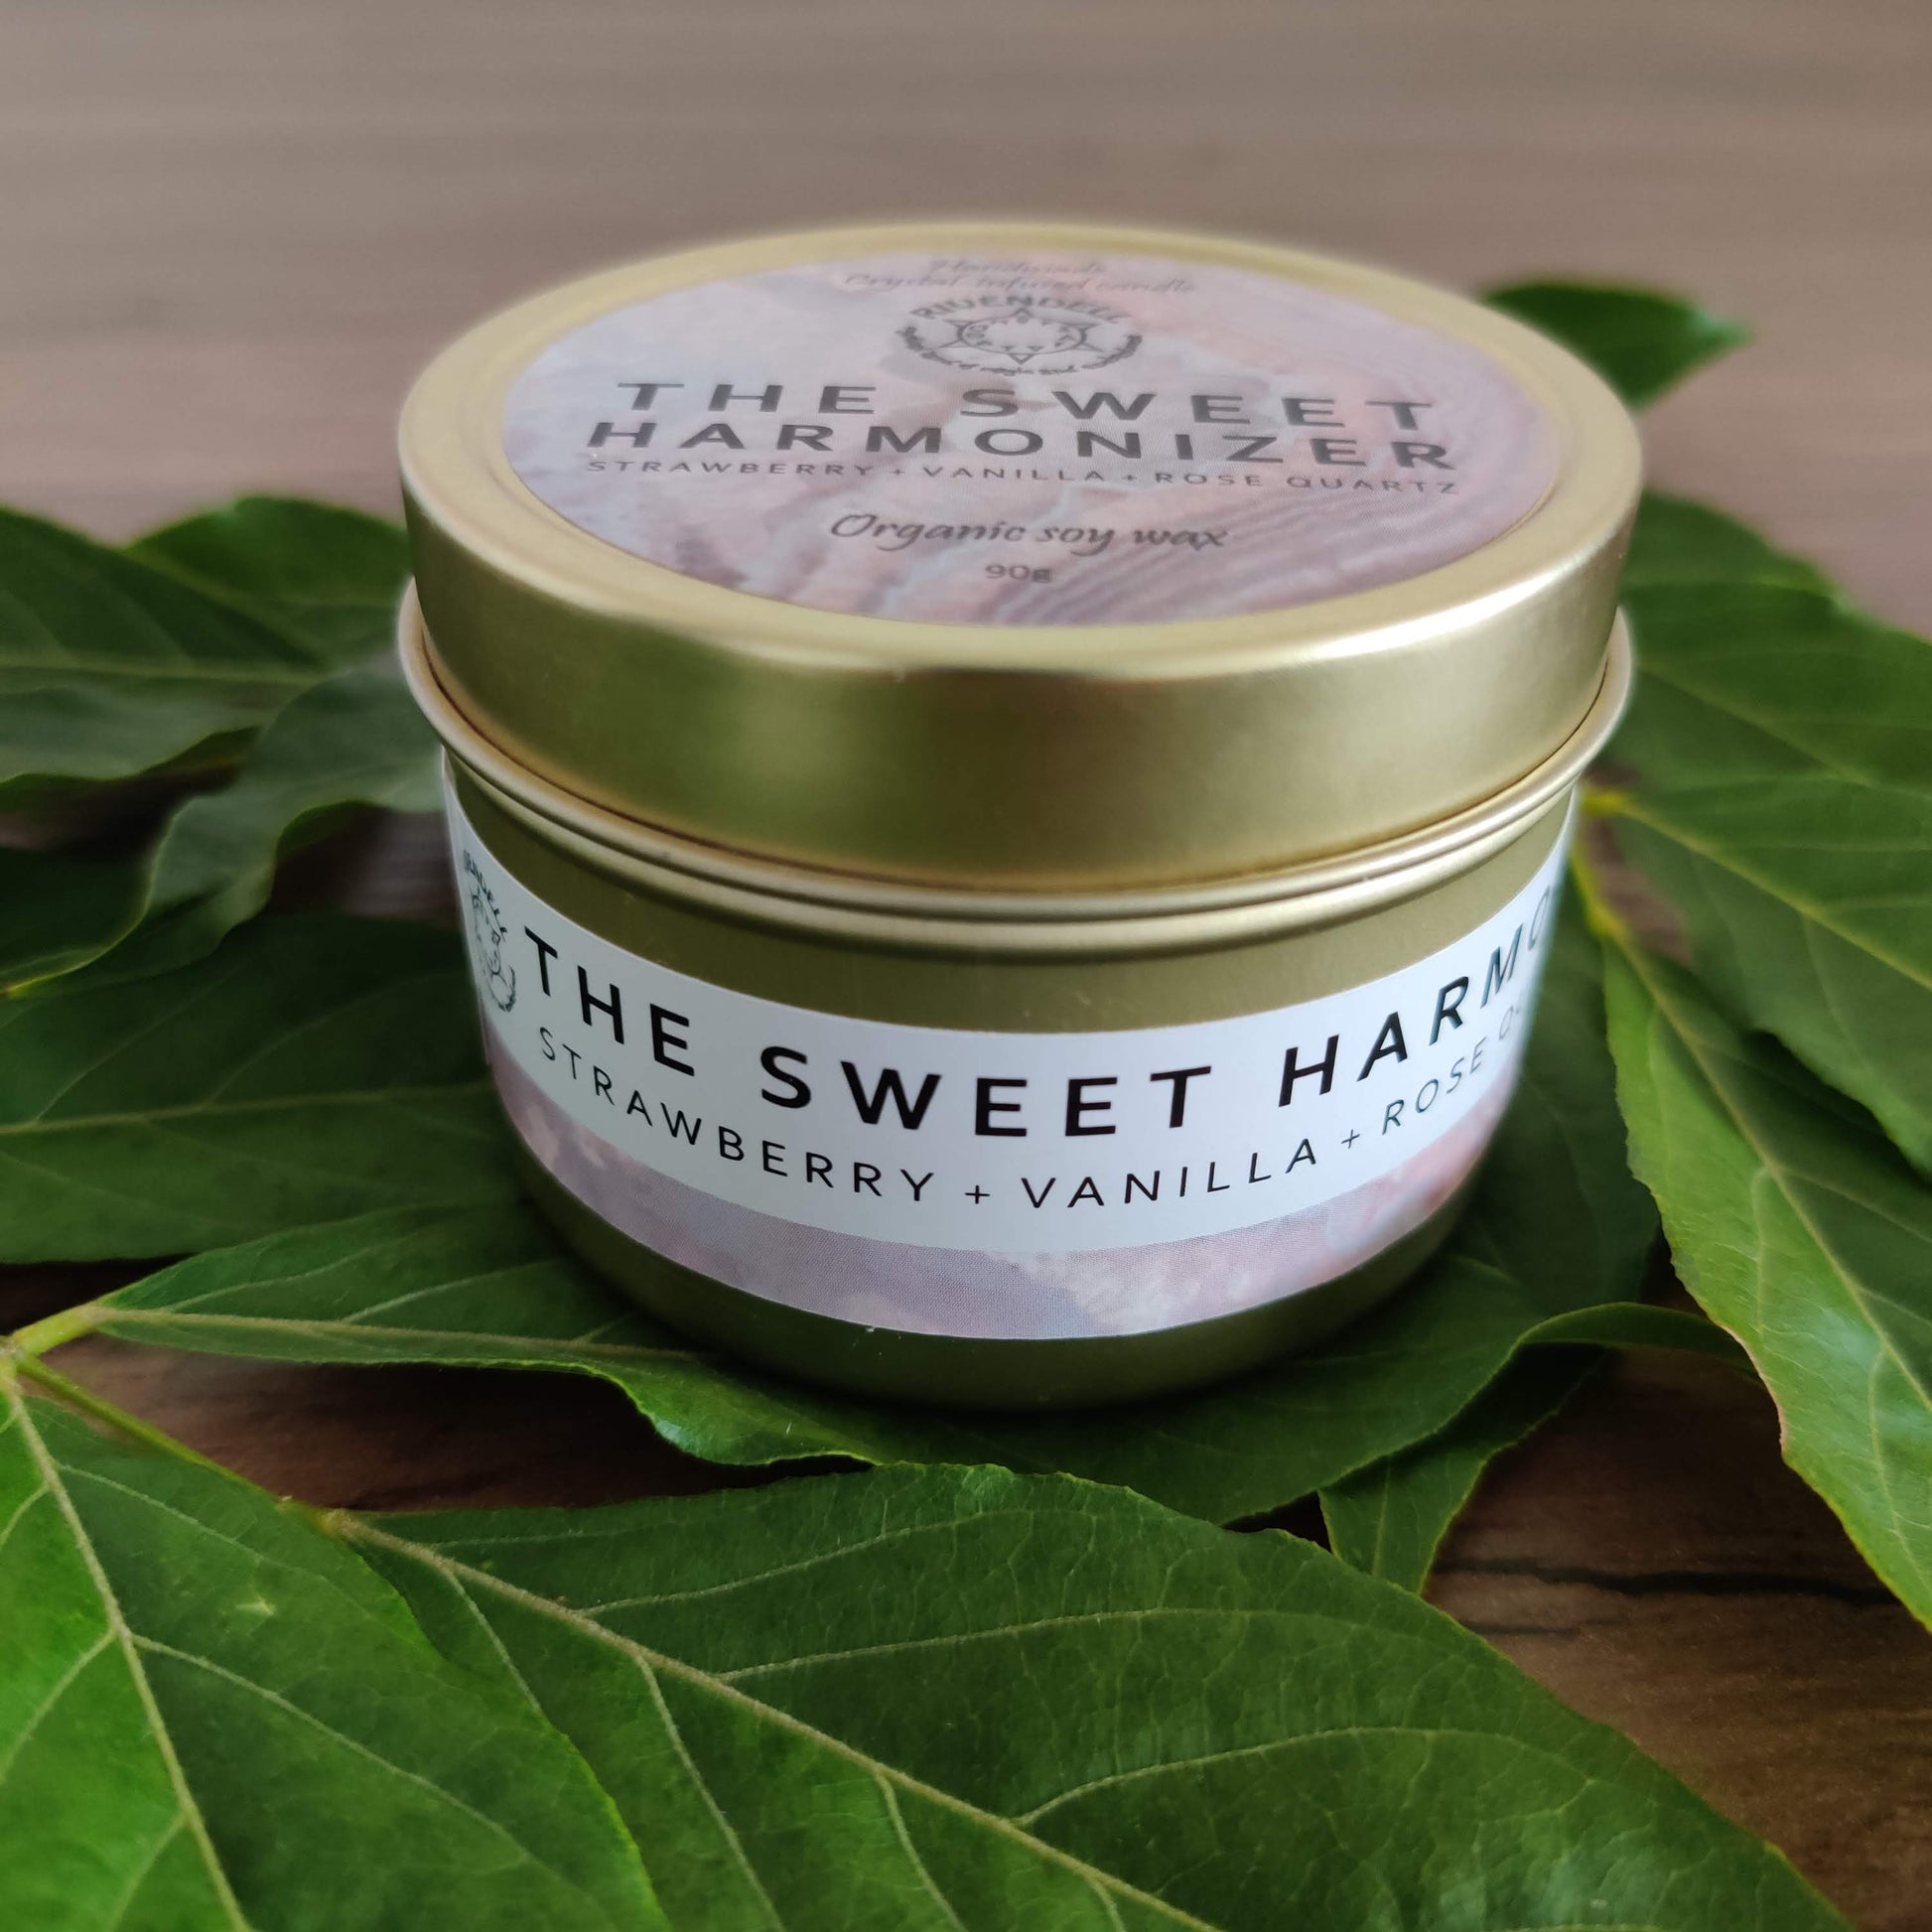 "The Sweet Harmonizer" Strawberry + Vanilla + Rose Quartz Crystal-infused Tin Candle - Rivendell Shop